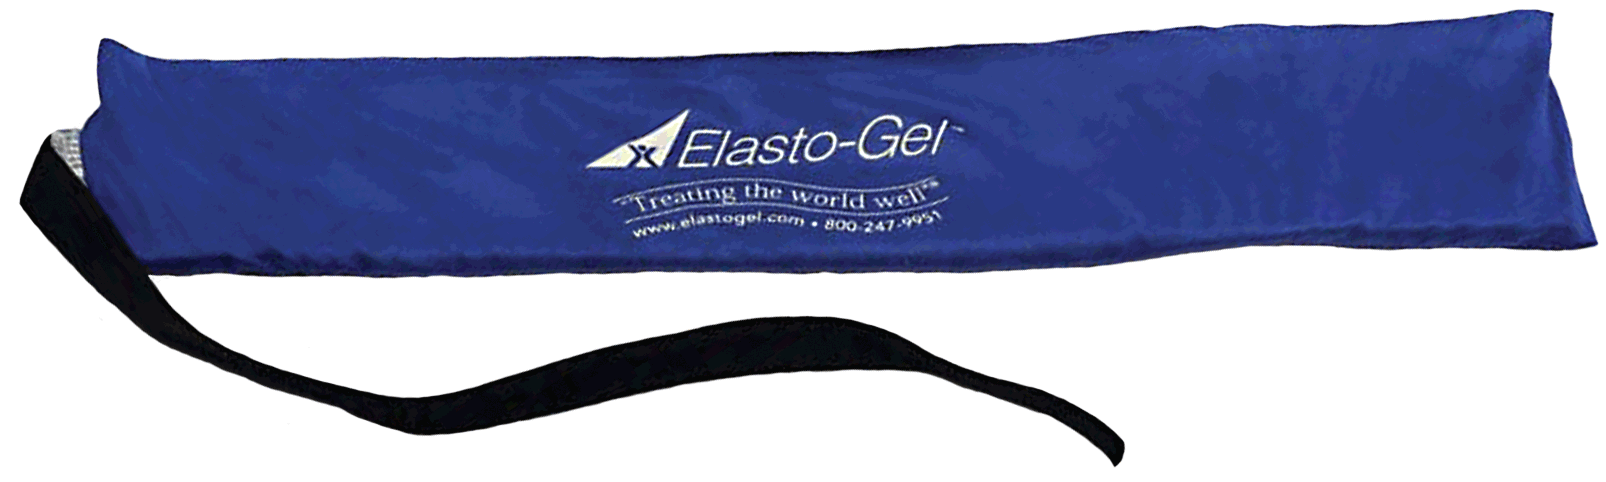 Elasto-Gel Wrap, 4